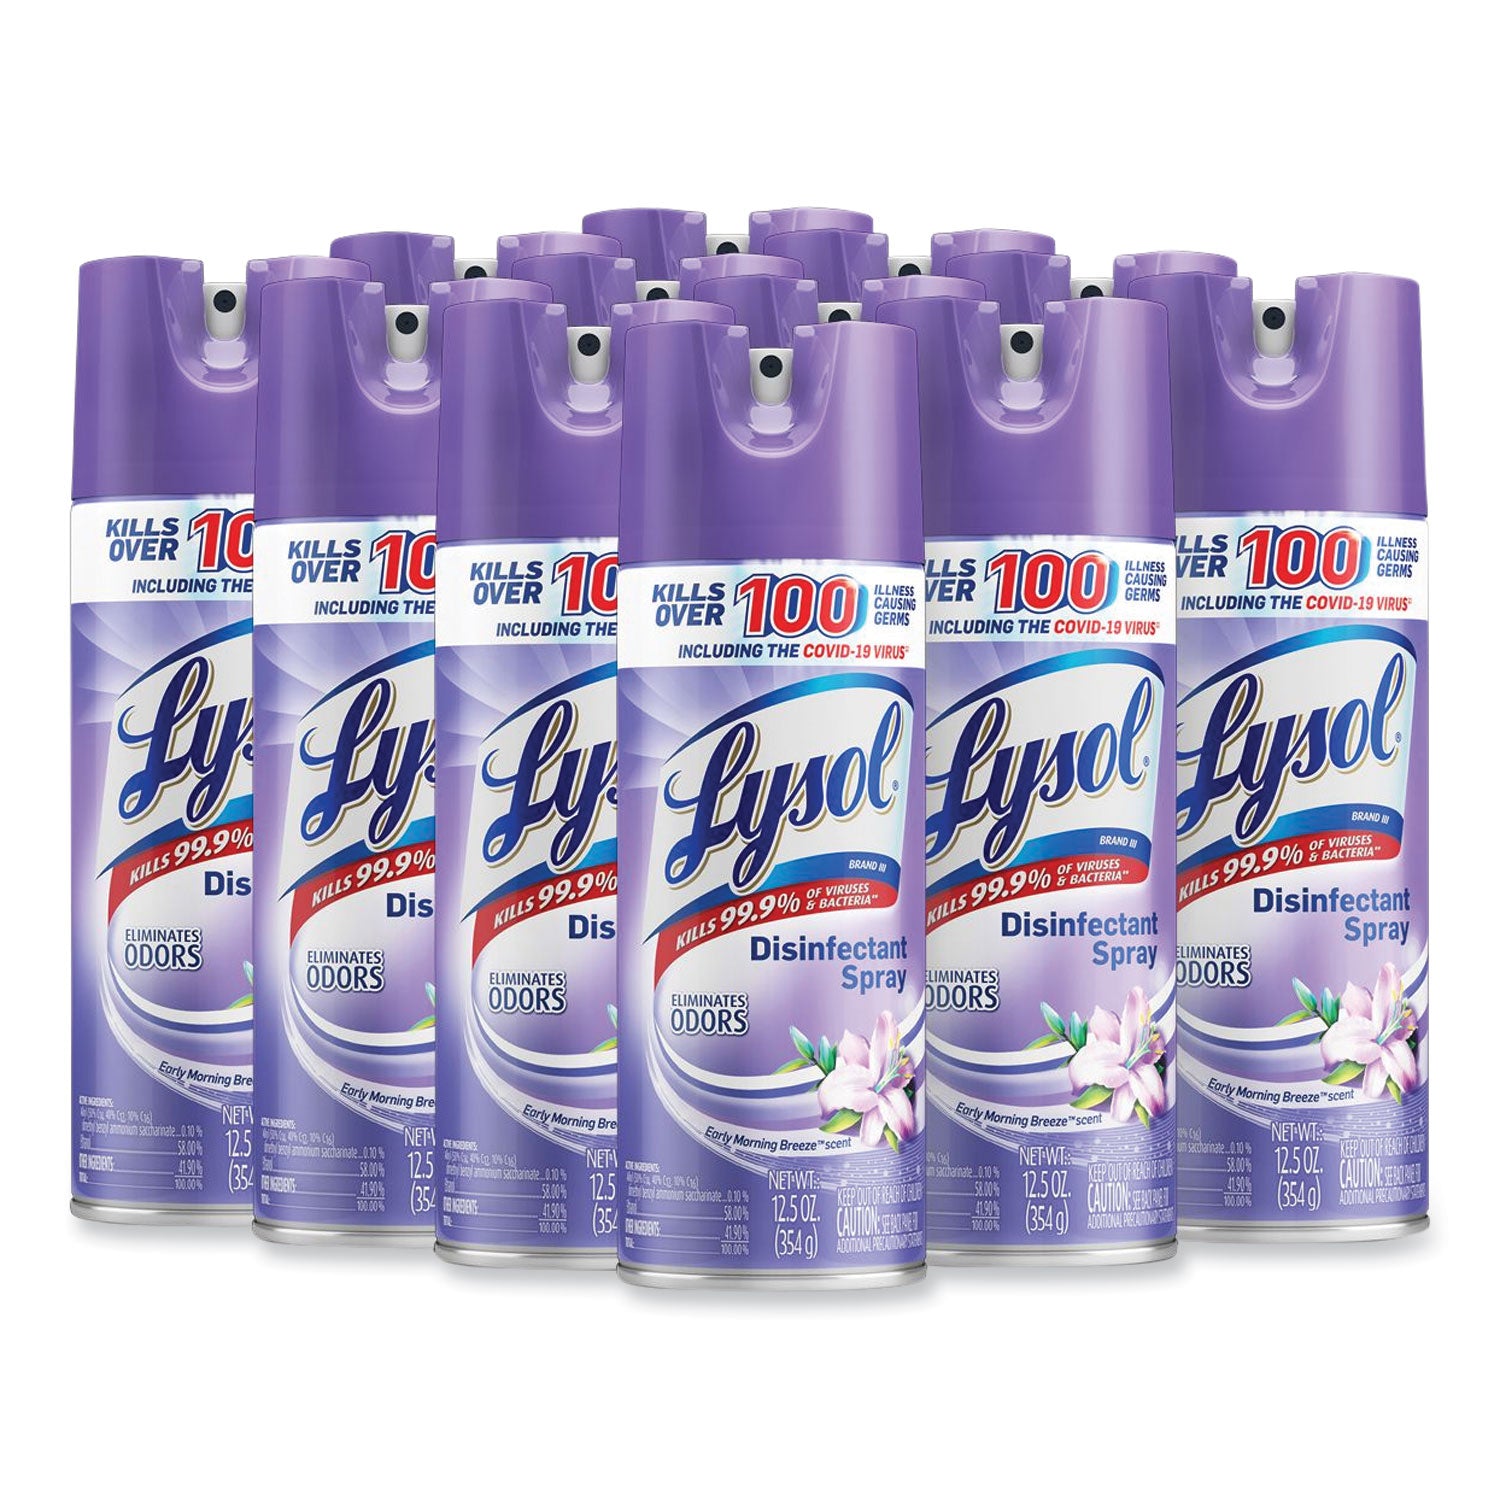 Disinfectant Spray, Early Morning Breeze, 12.5 oz Aerosol Spray, 12/Carton - 